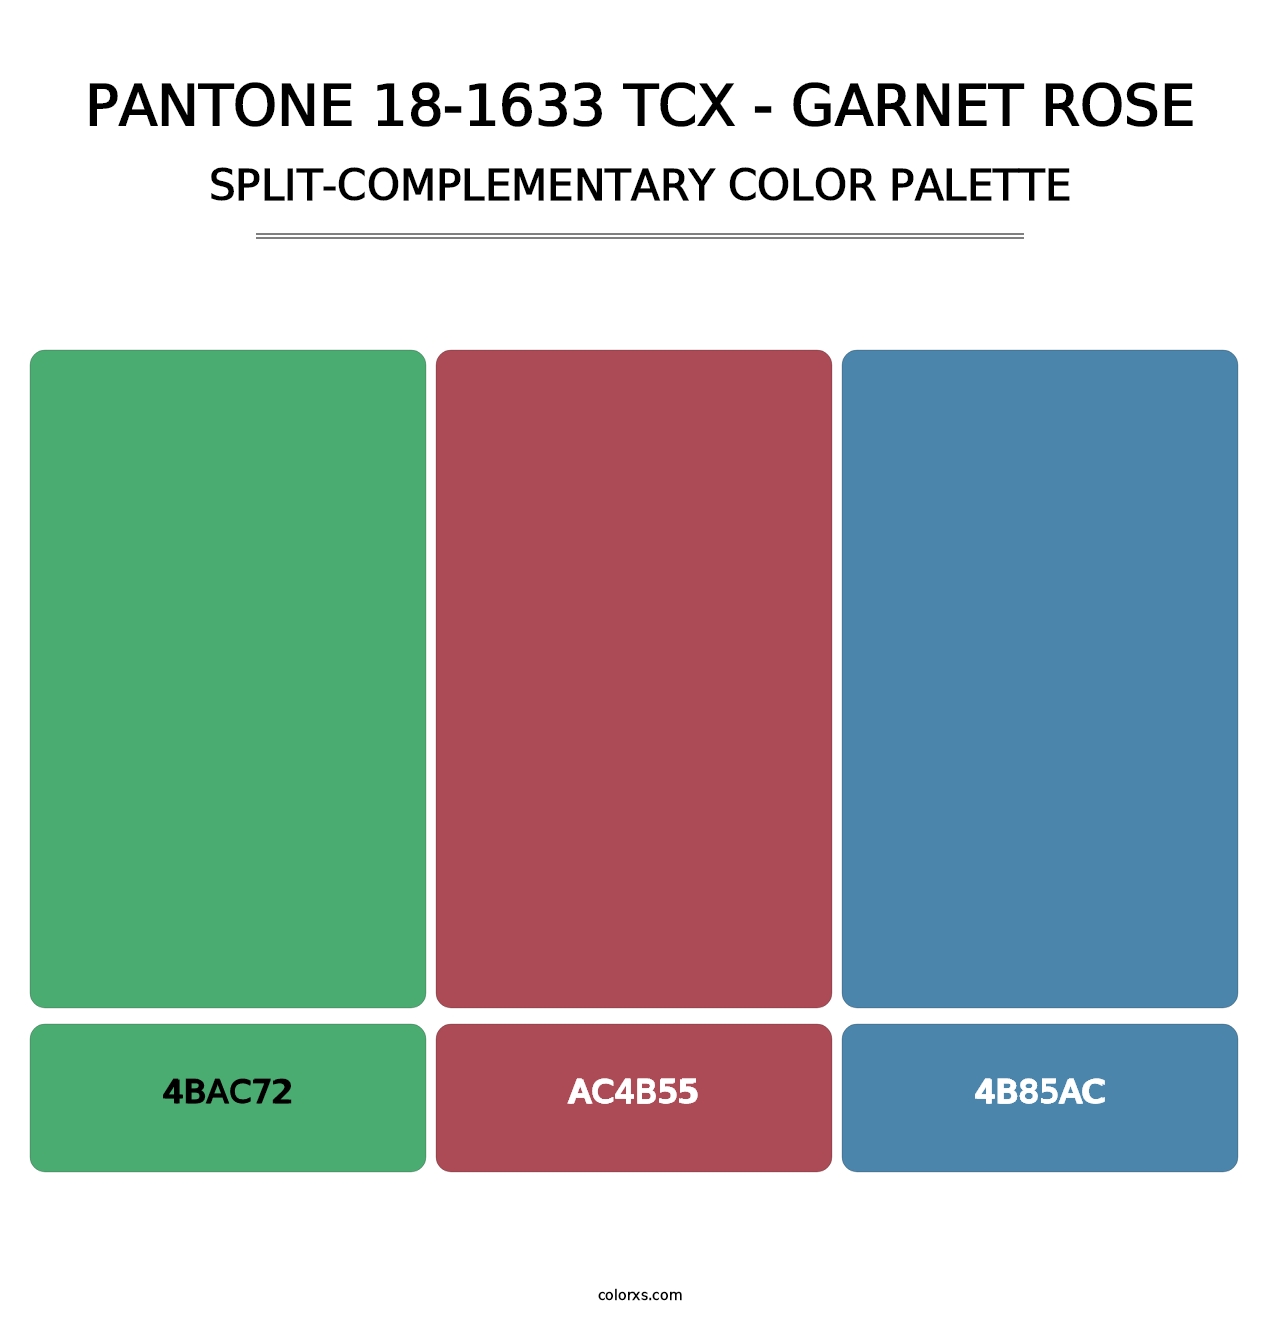 PANTONE 18-1633 TCX - Garnet Rose - Split-Complementary Color Palette